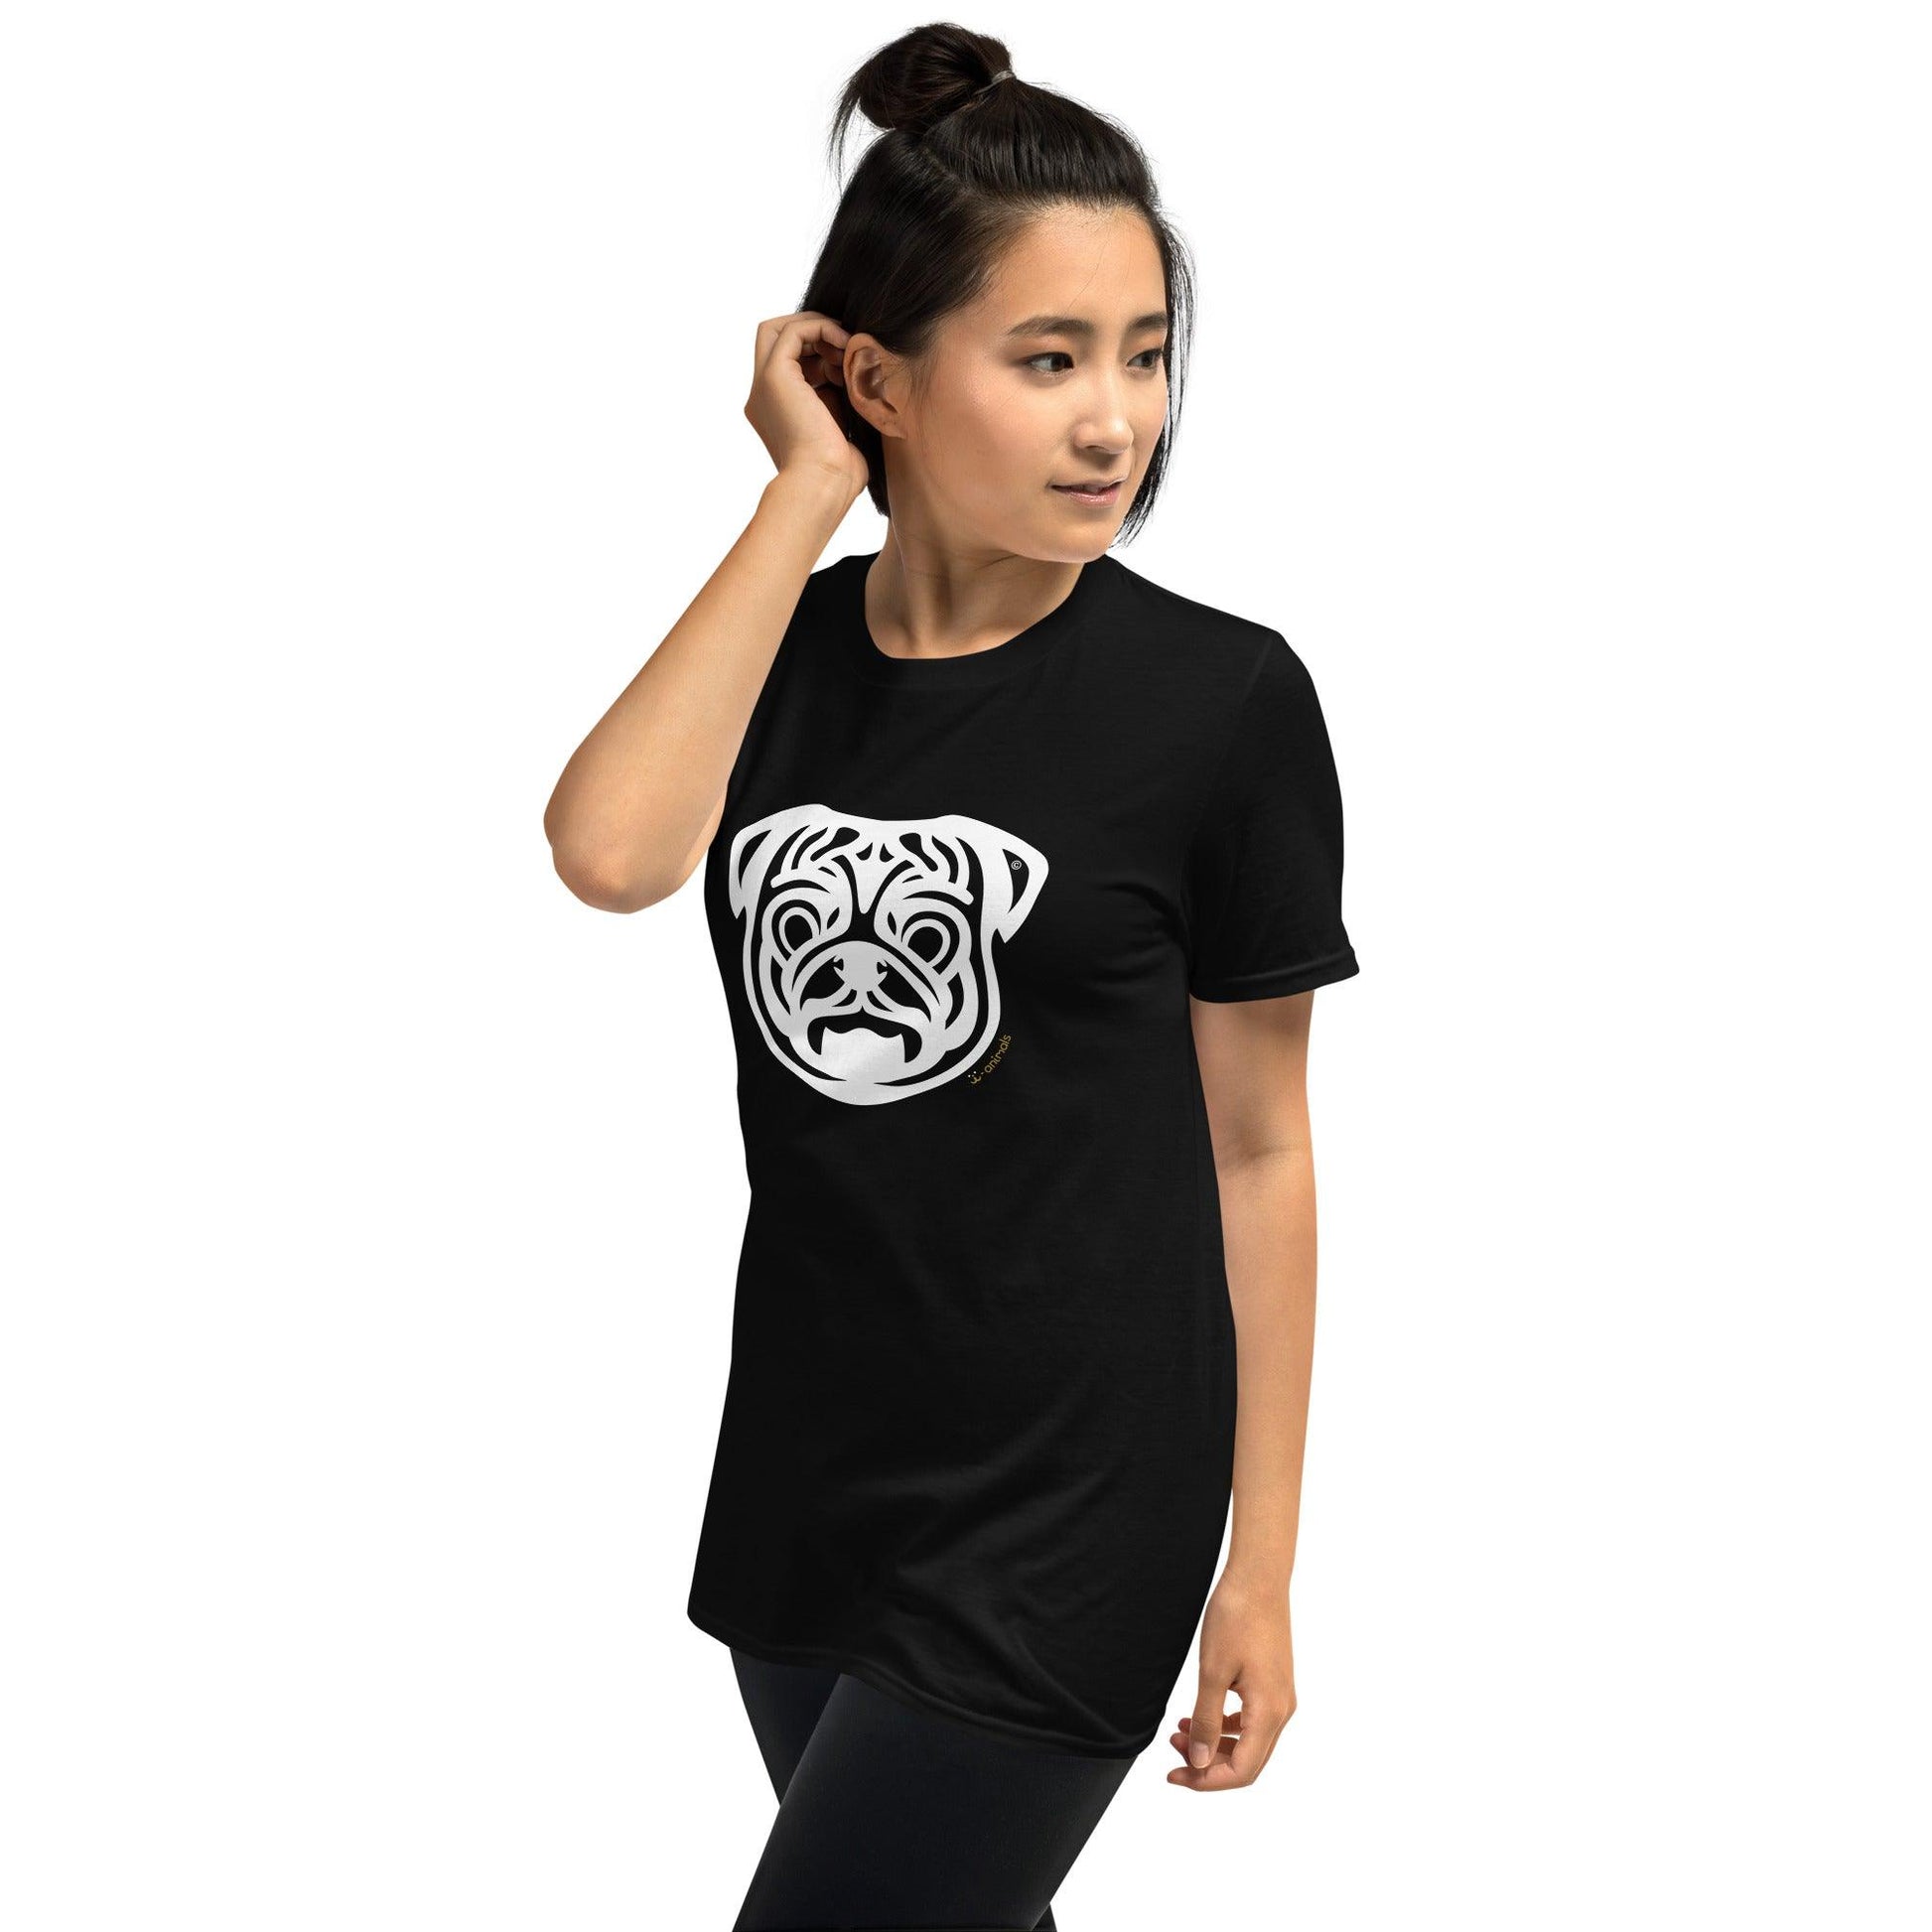 Camiseta unissex de manga curta - Pug - Tribal i-animals